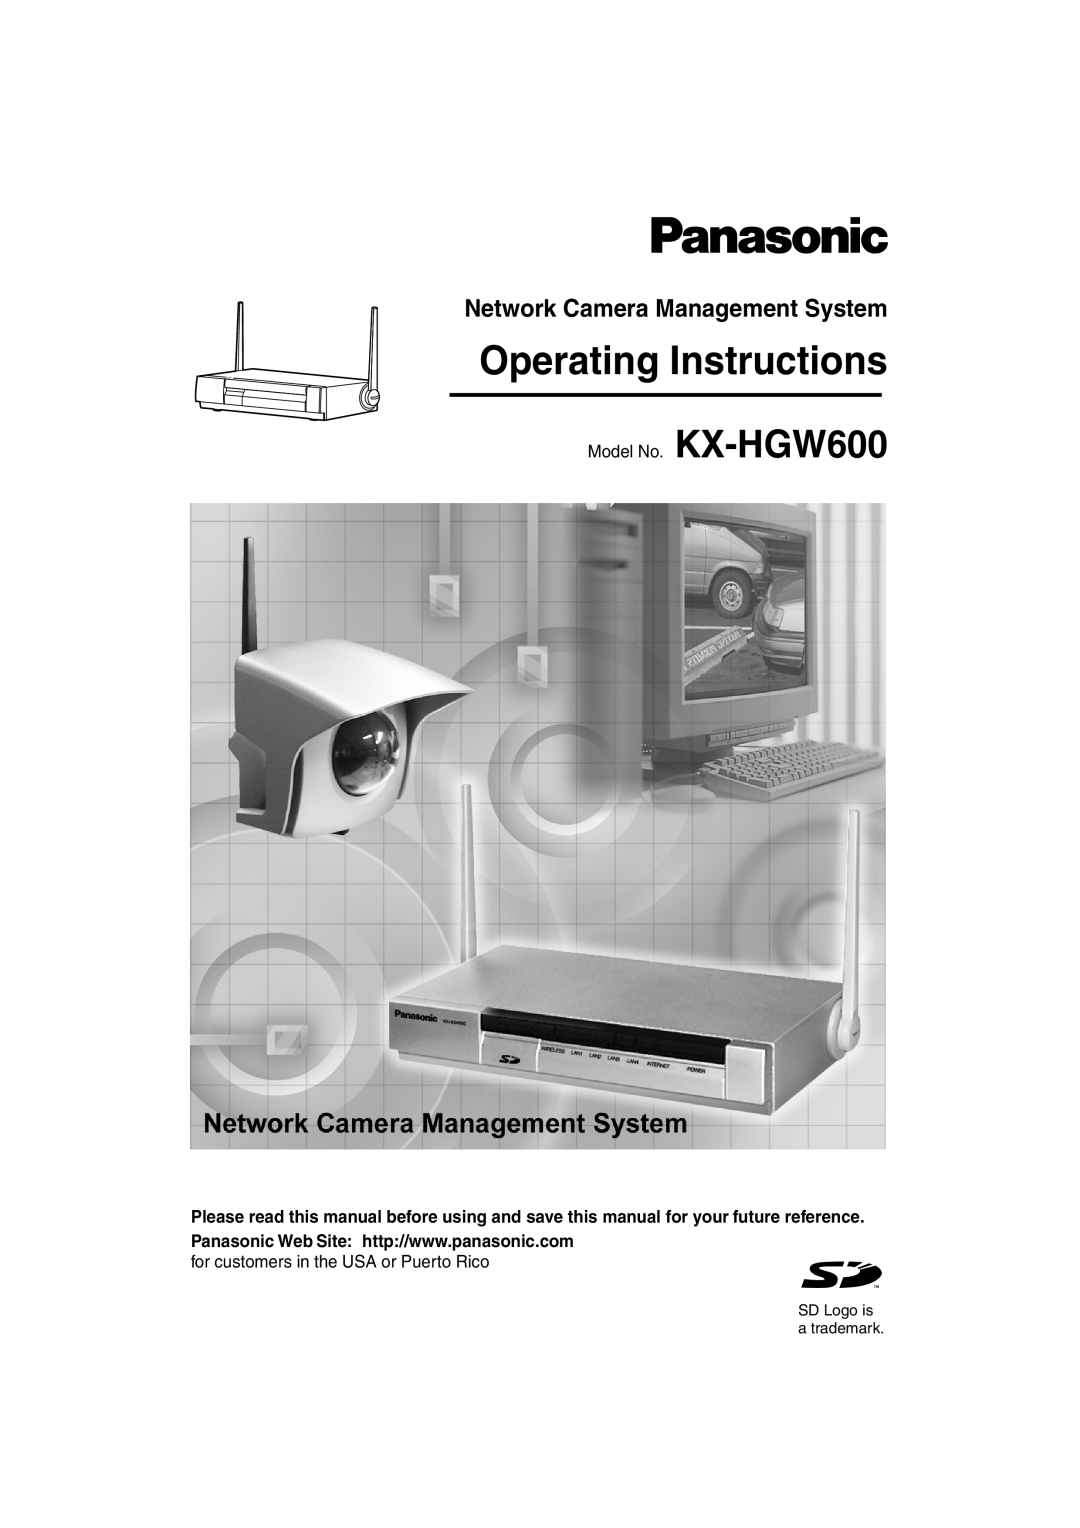 Panasonic manual Network Camera Management System, Operating Instructions, Model No. KX-HGW600, KX-HGW500, Internet 